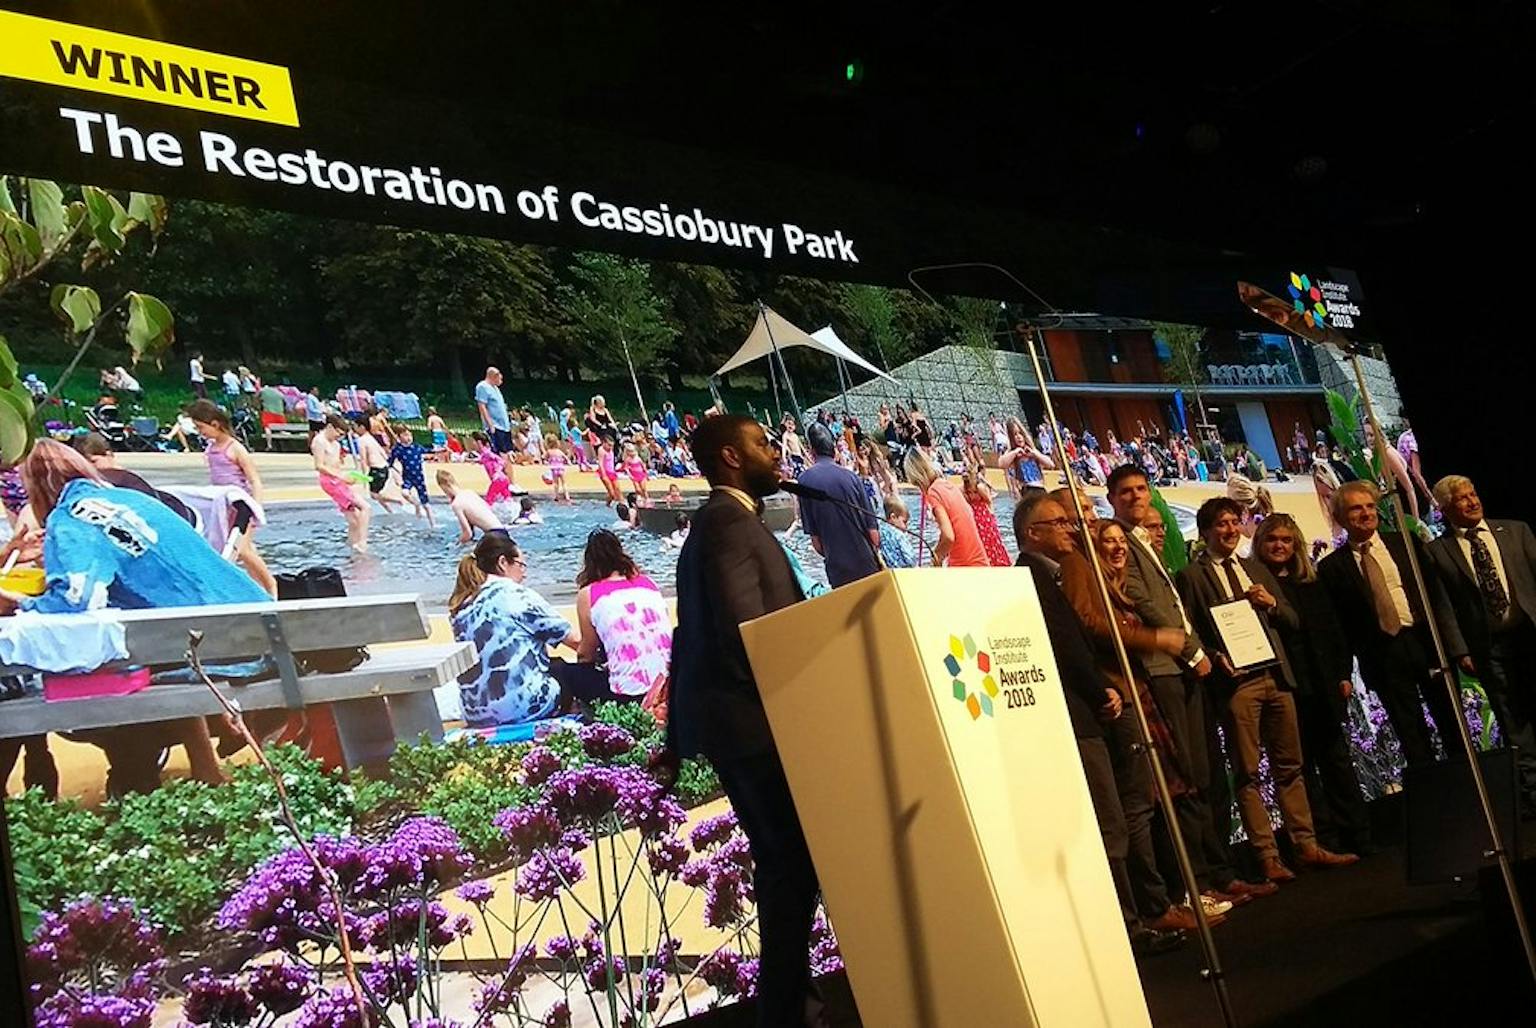 Landscape Institute Awards 2018 winner, The Restoration of Cassiobury Park